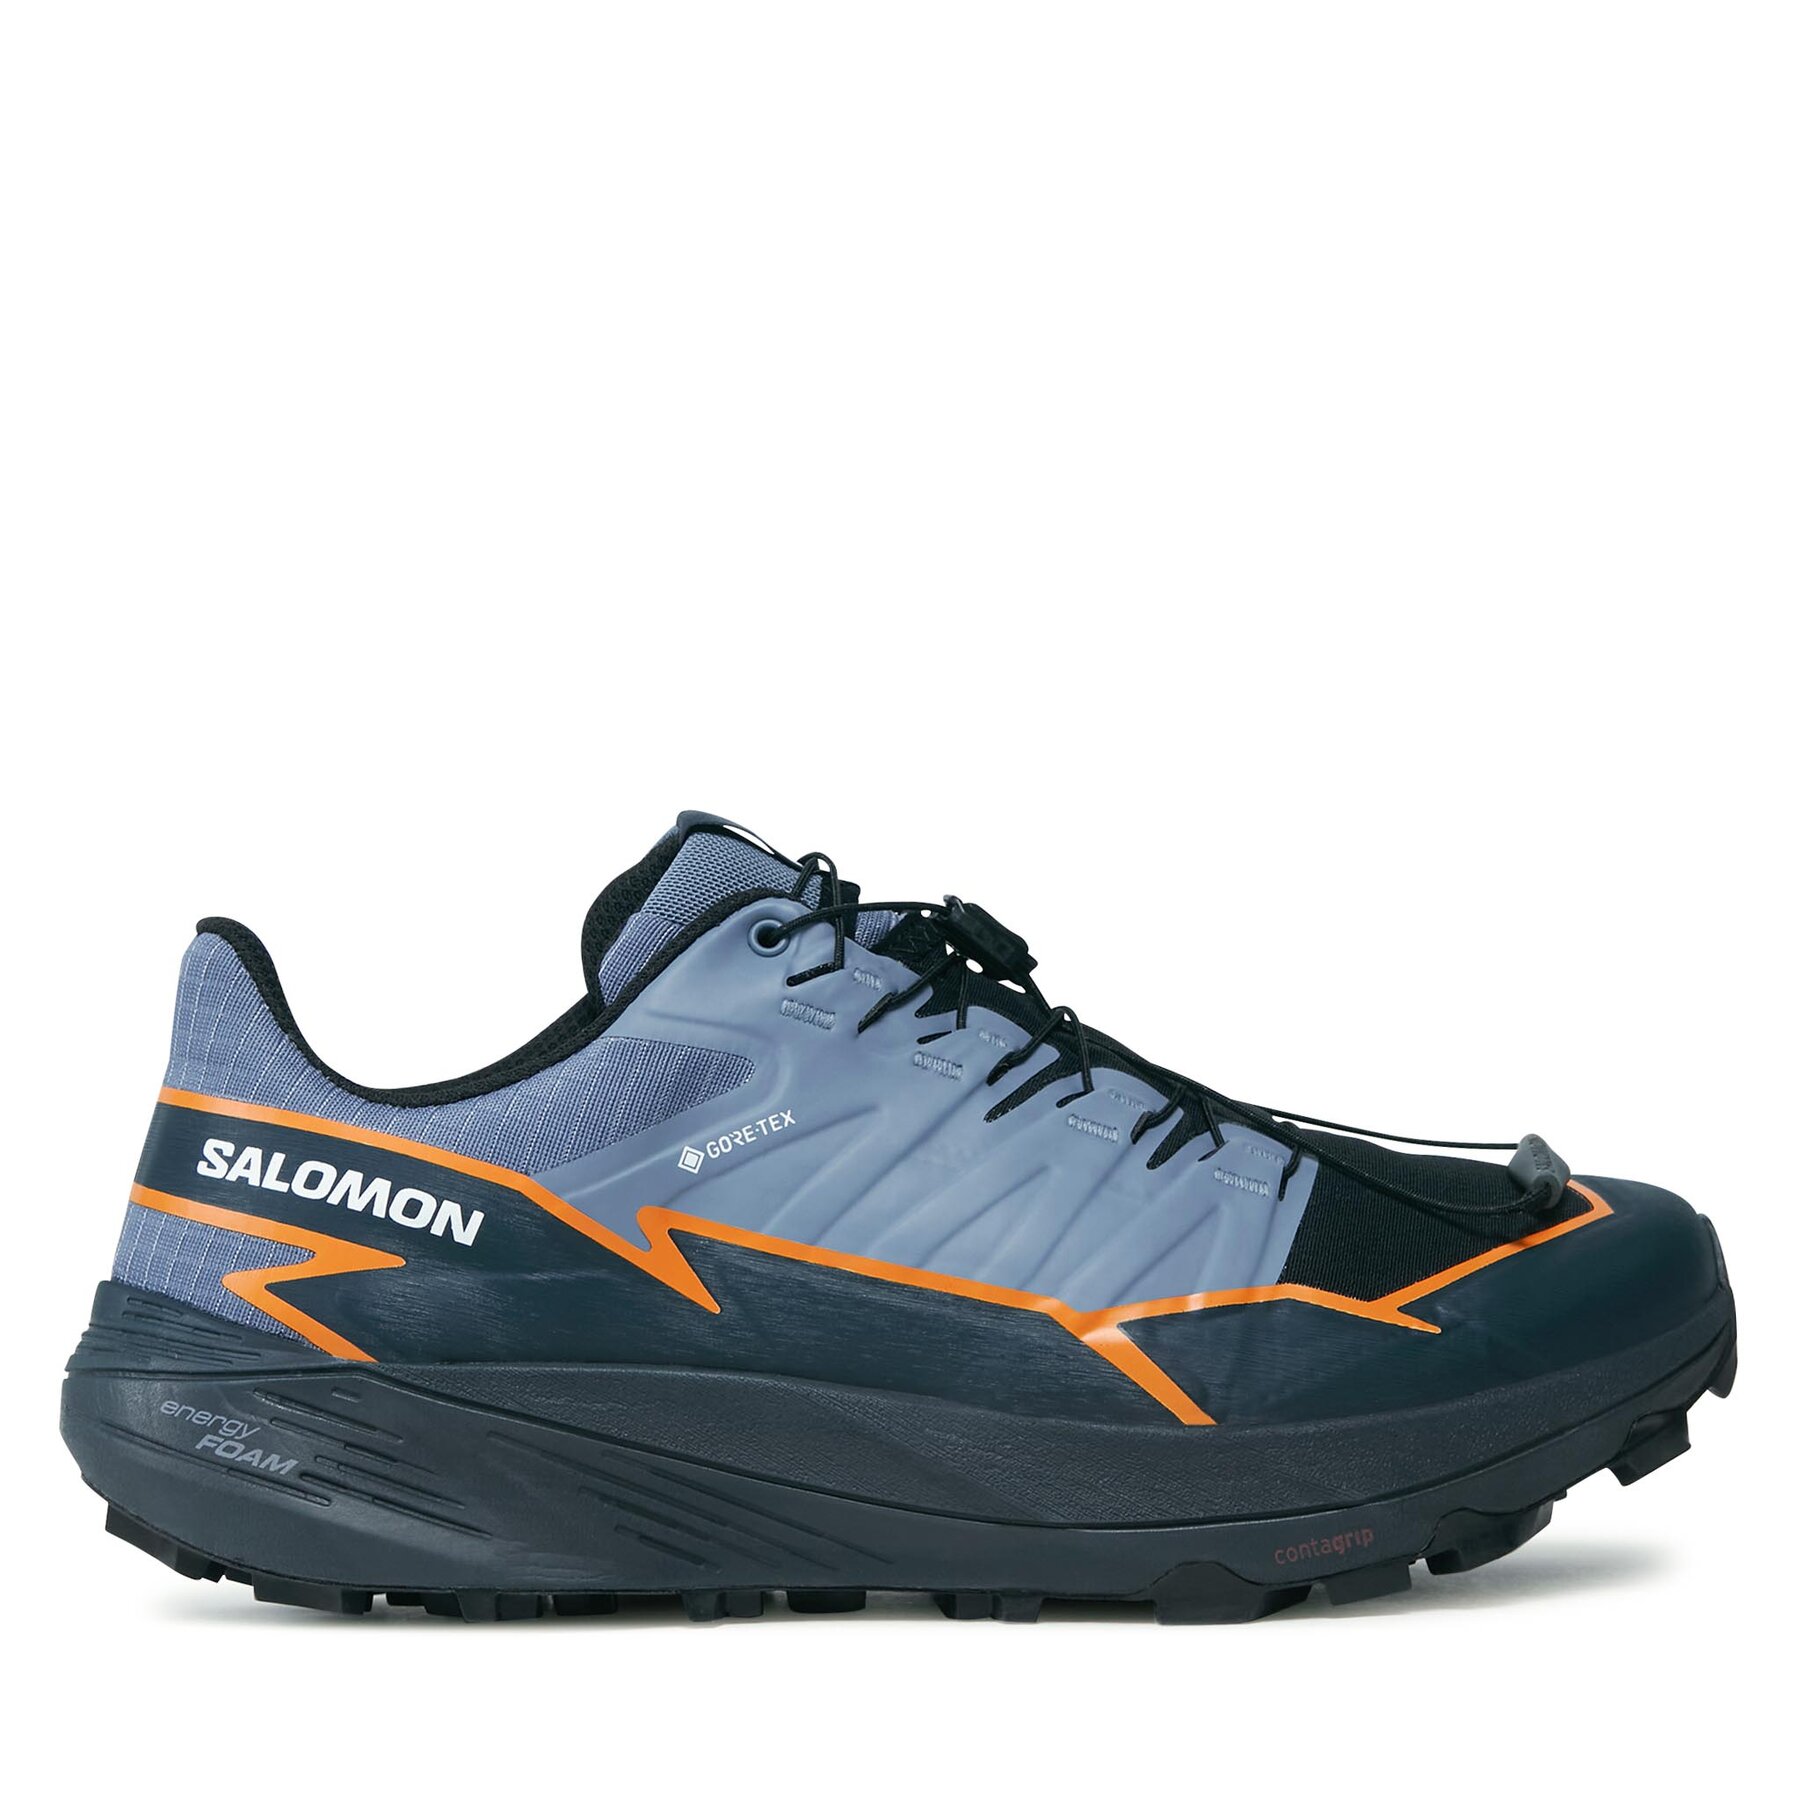 Schuhe Salomon Thundercross GORE-TEX L47383100 Flint Stone/Carbon/Orange Pepper von Salomon